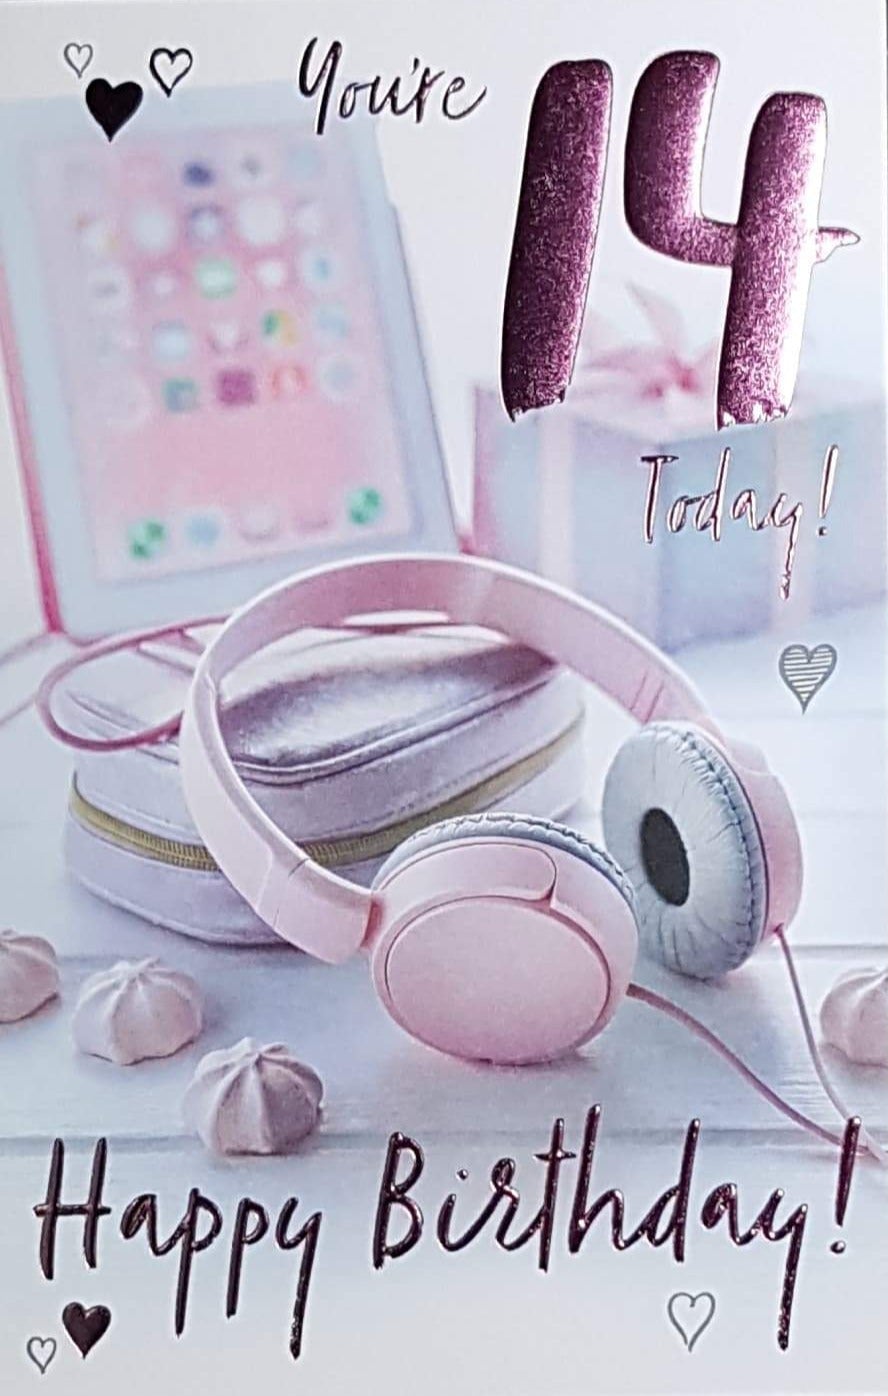 Age 14 Birthday Card - Pink Headphones On The Desk